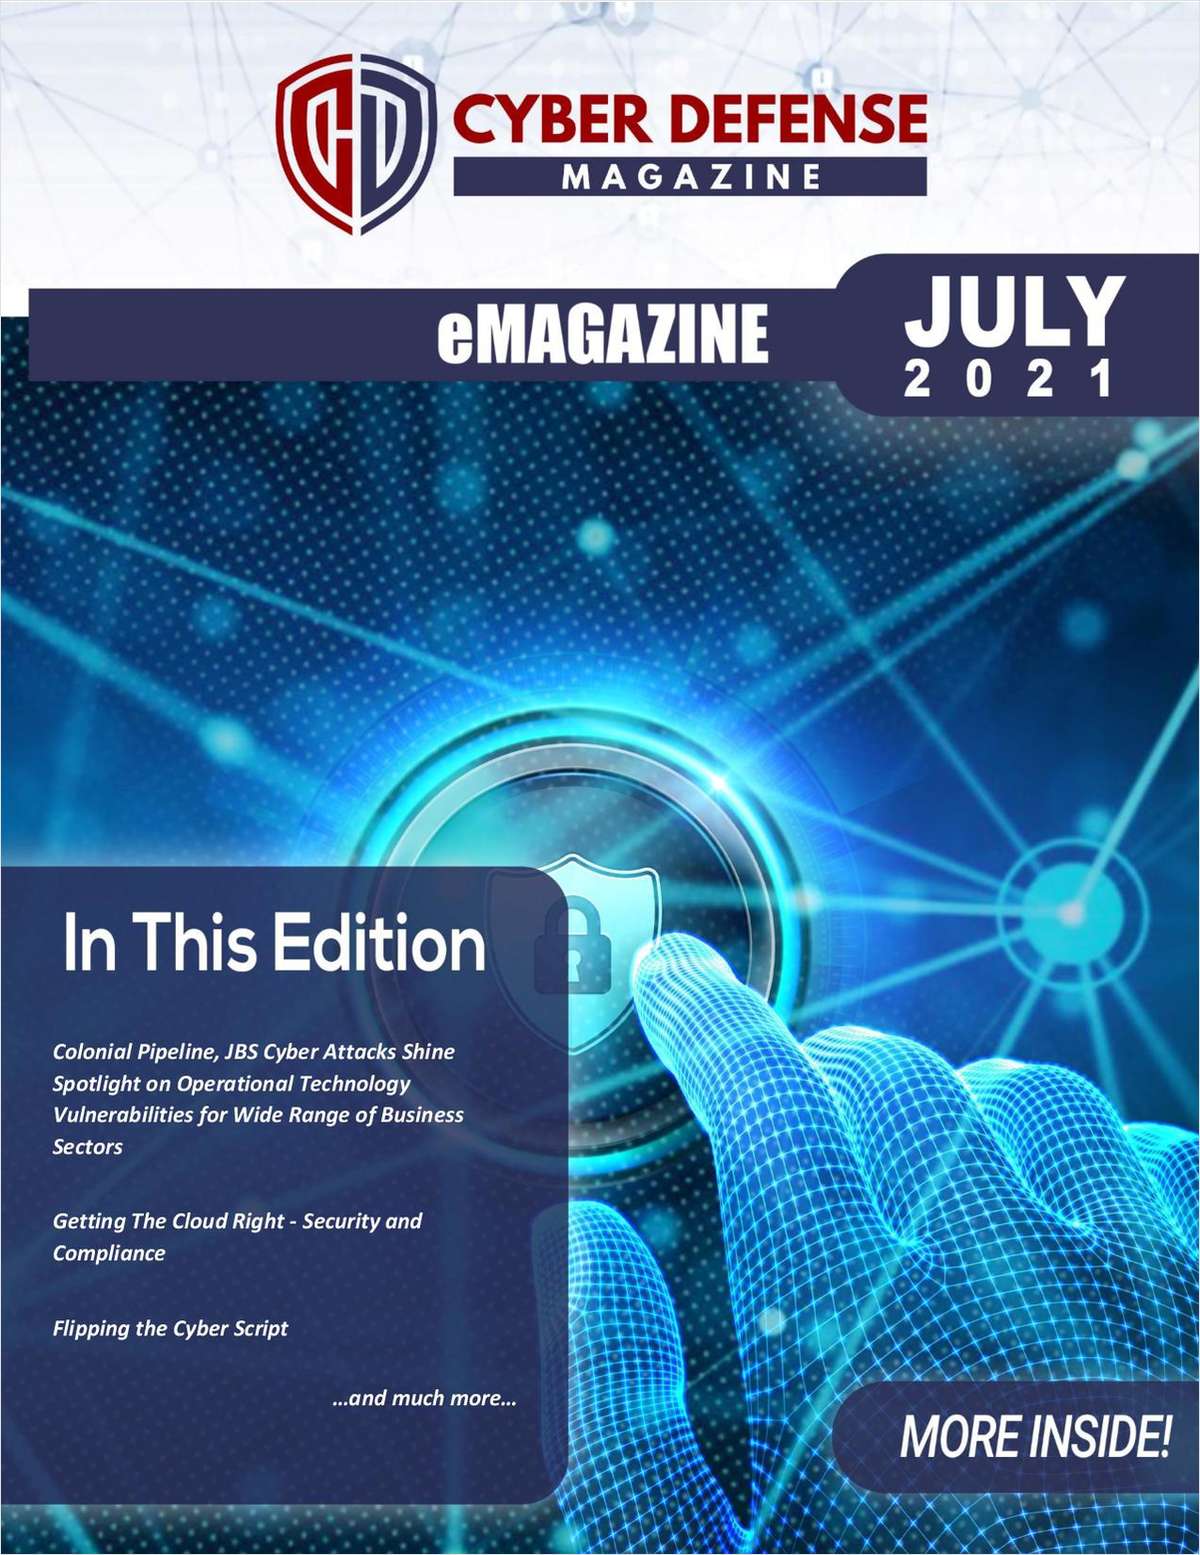 Cyber Defense Magazine July 2021 Edition